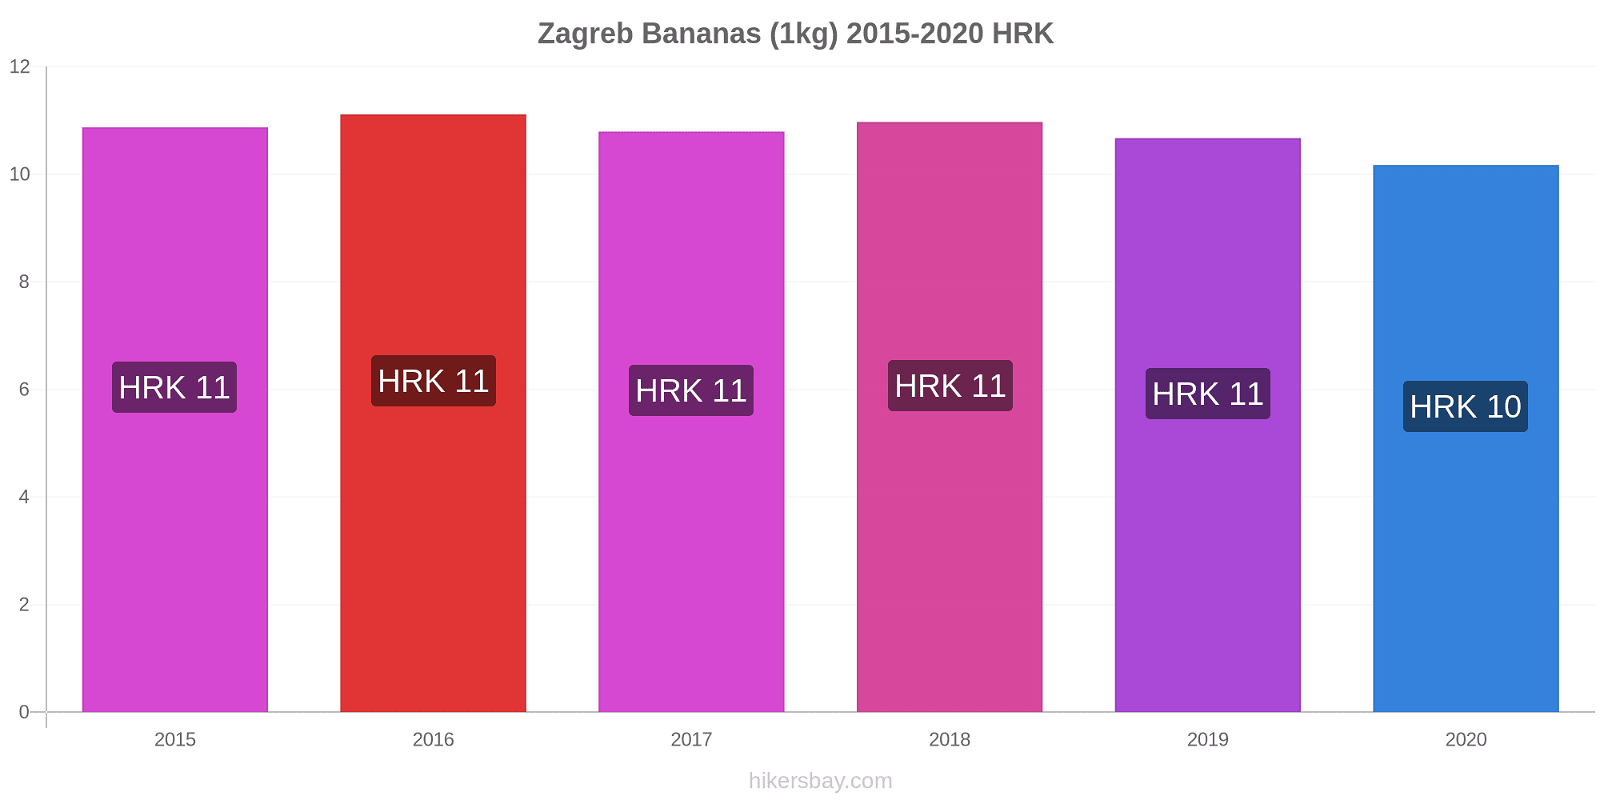 Zagreb price changes Bananas (1kg) hikersbay.com